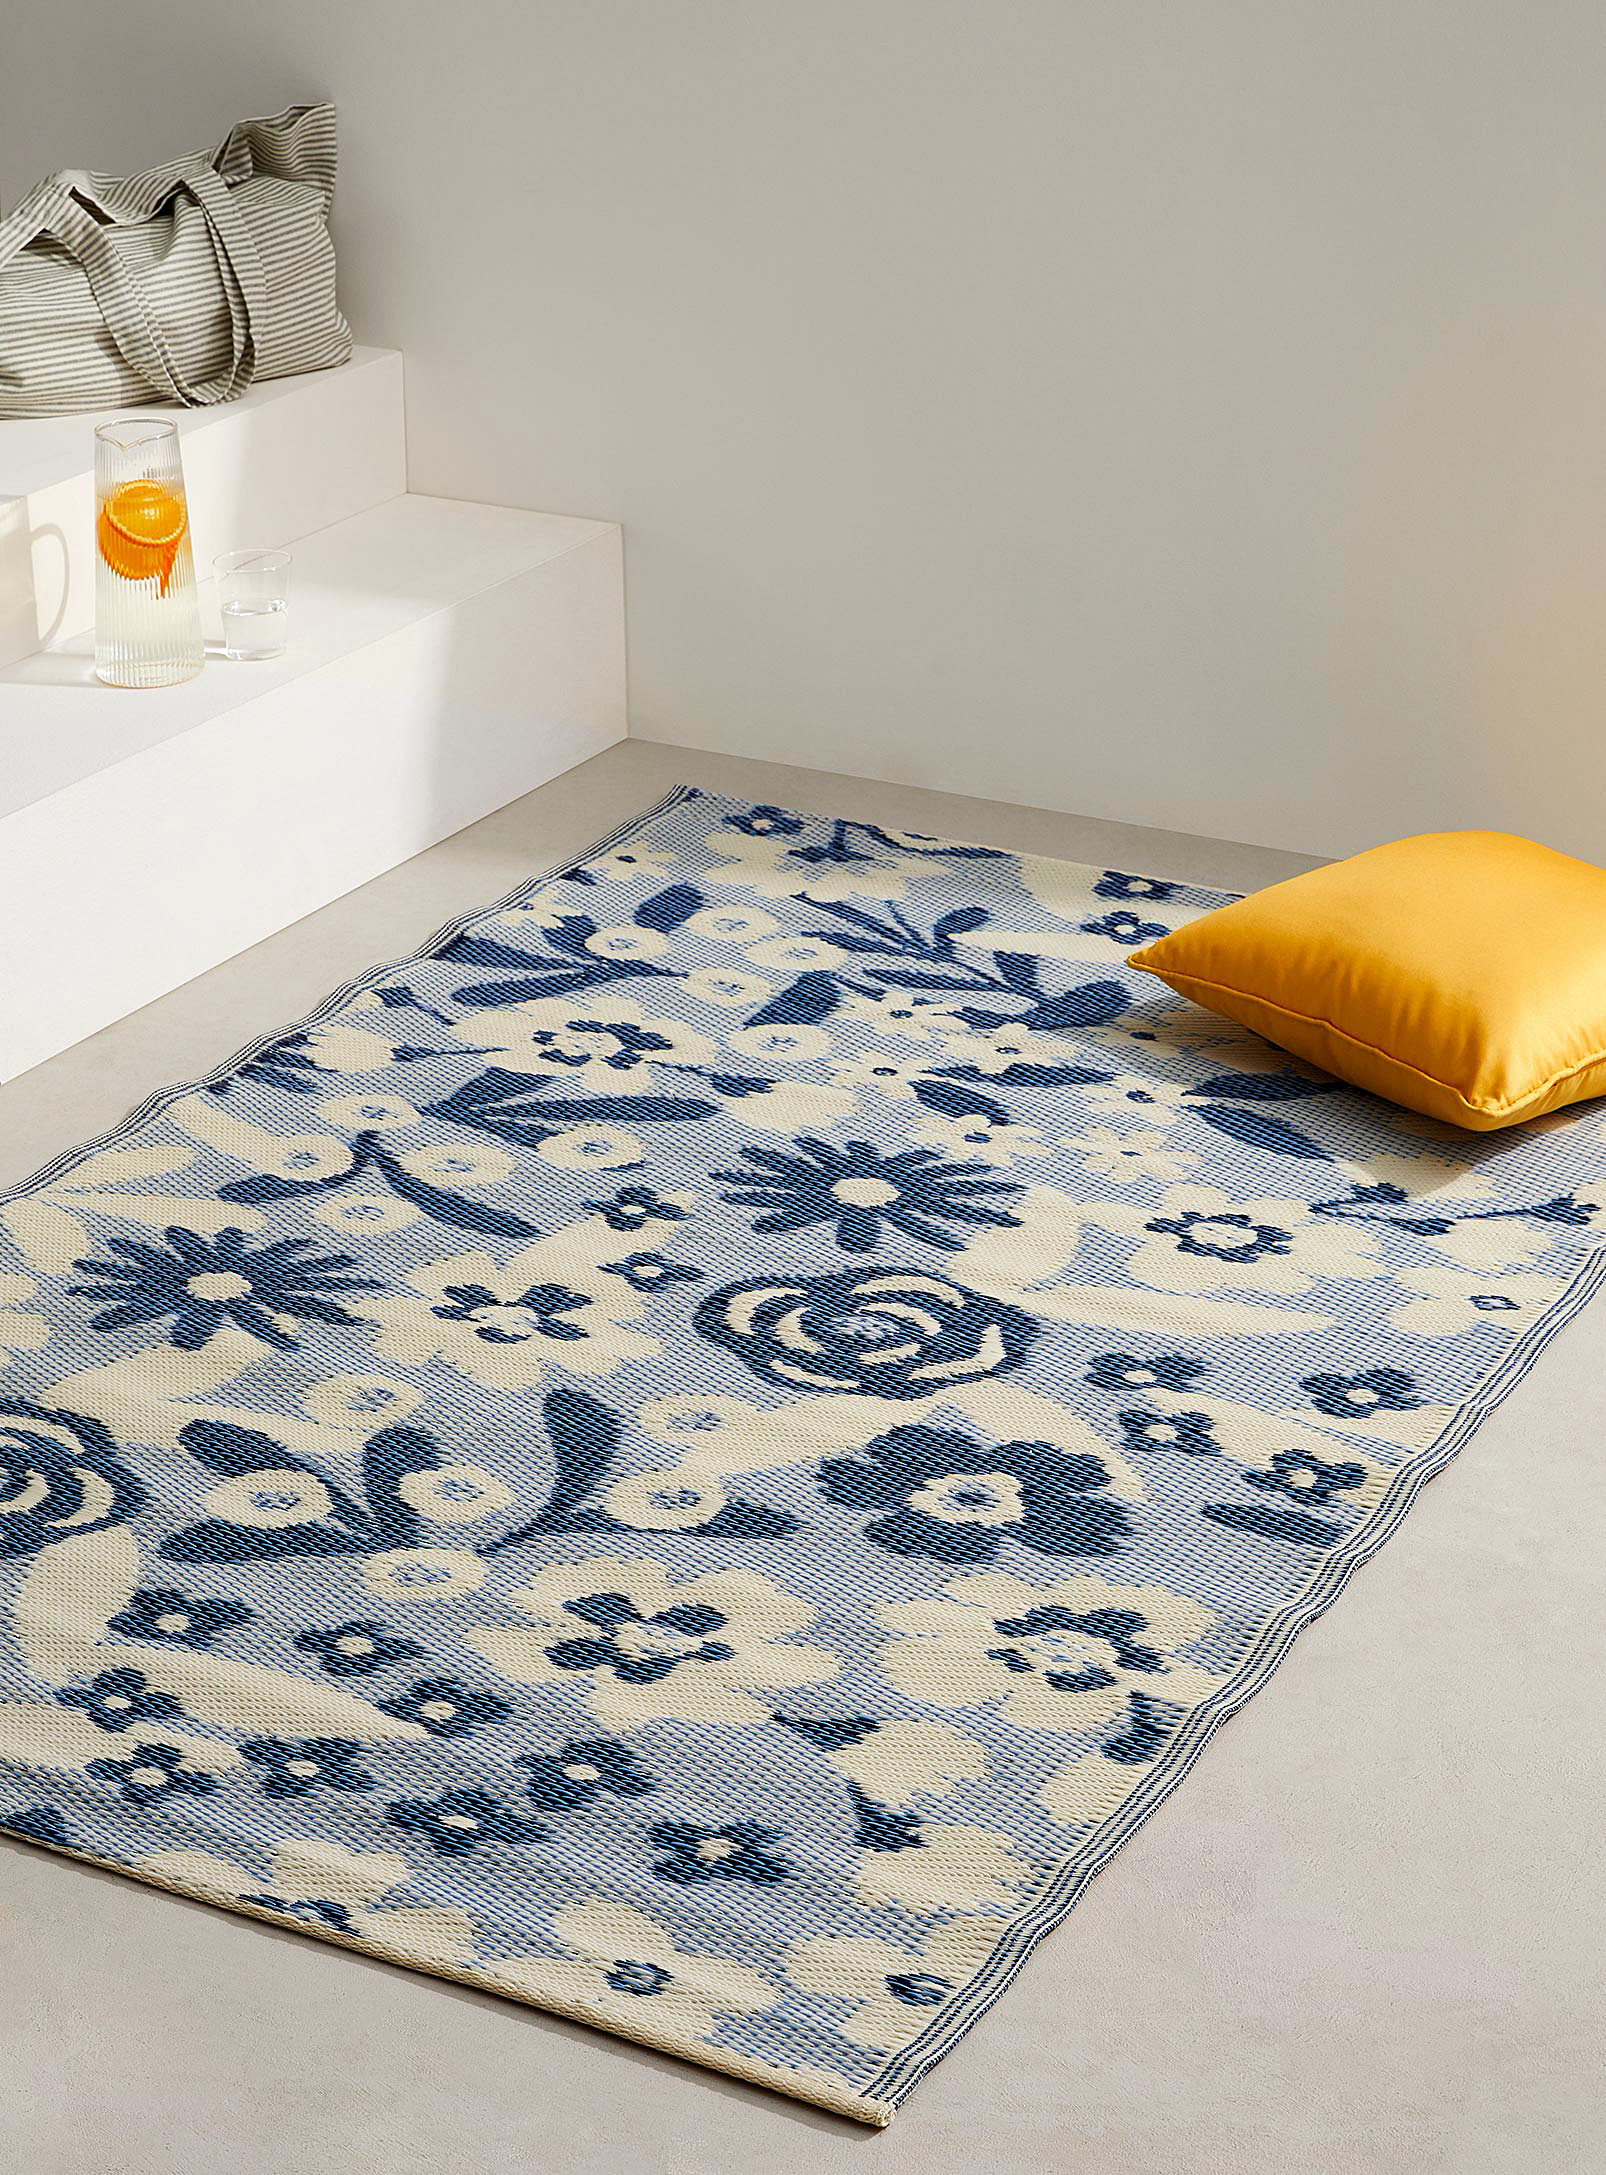 Simons Maison - Blue flower outdoor rug 120 x 180 cm